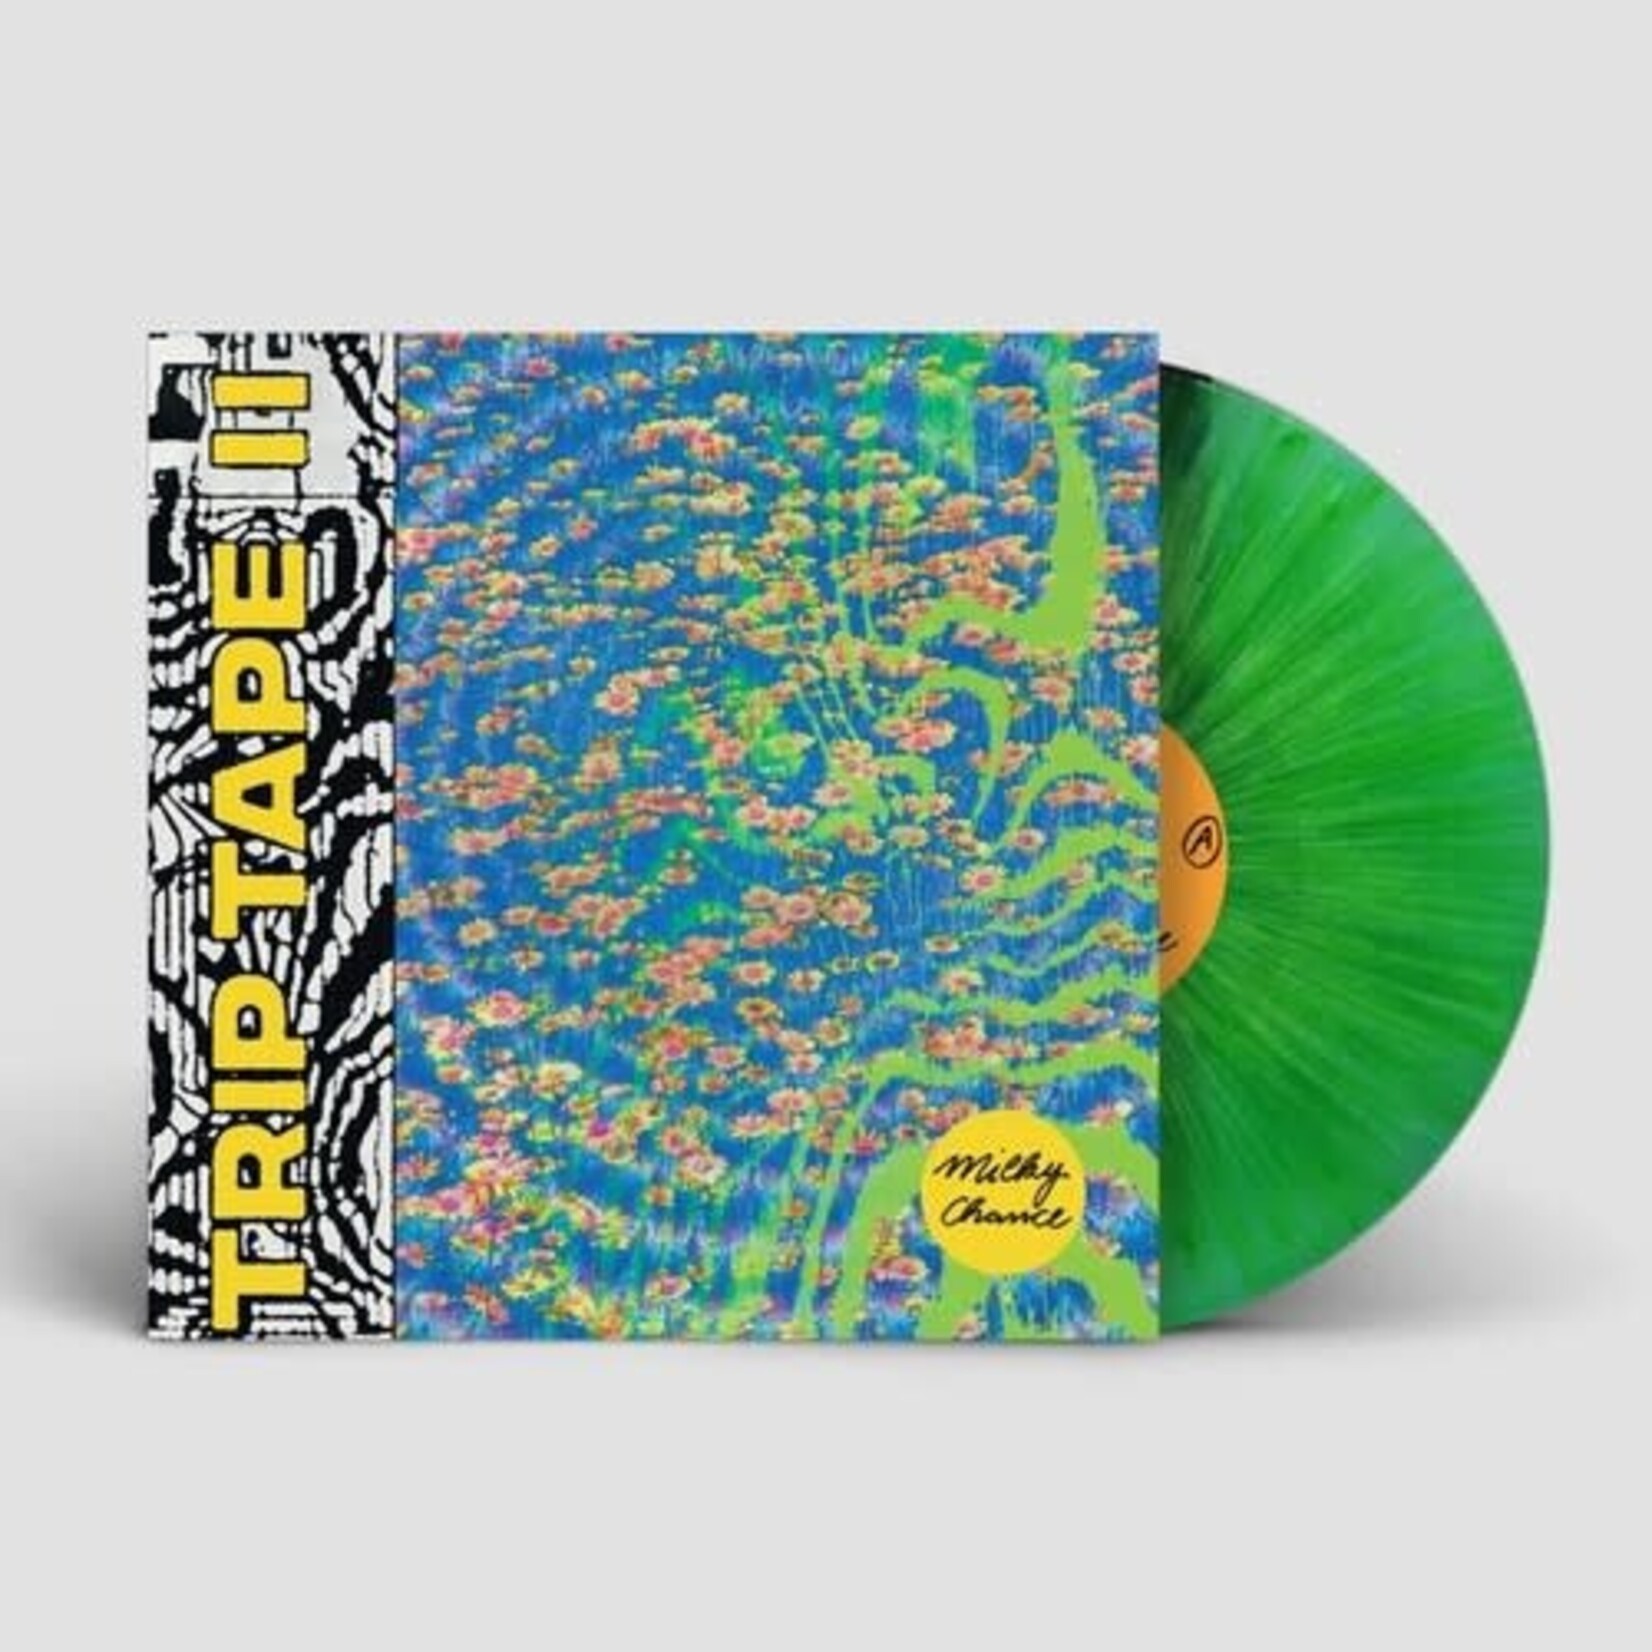 [New] Milky Chance - Trip Tape II (green splatter vinyl)